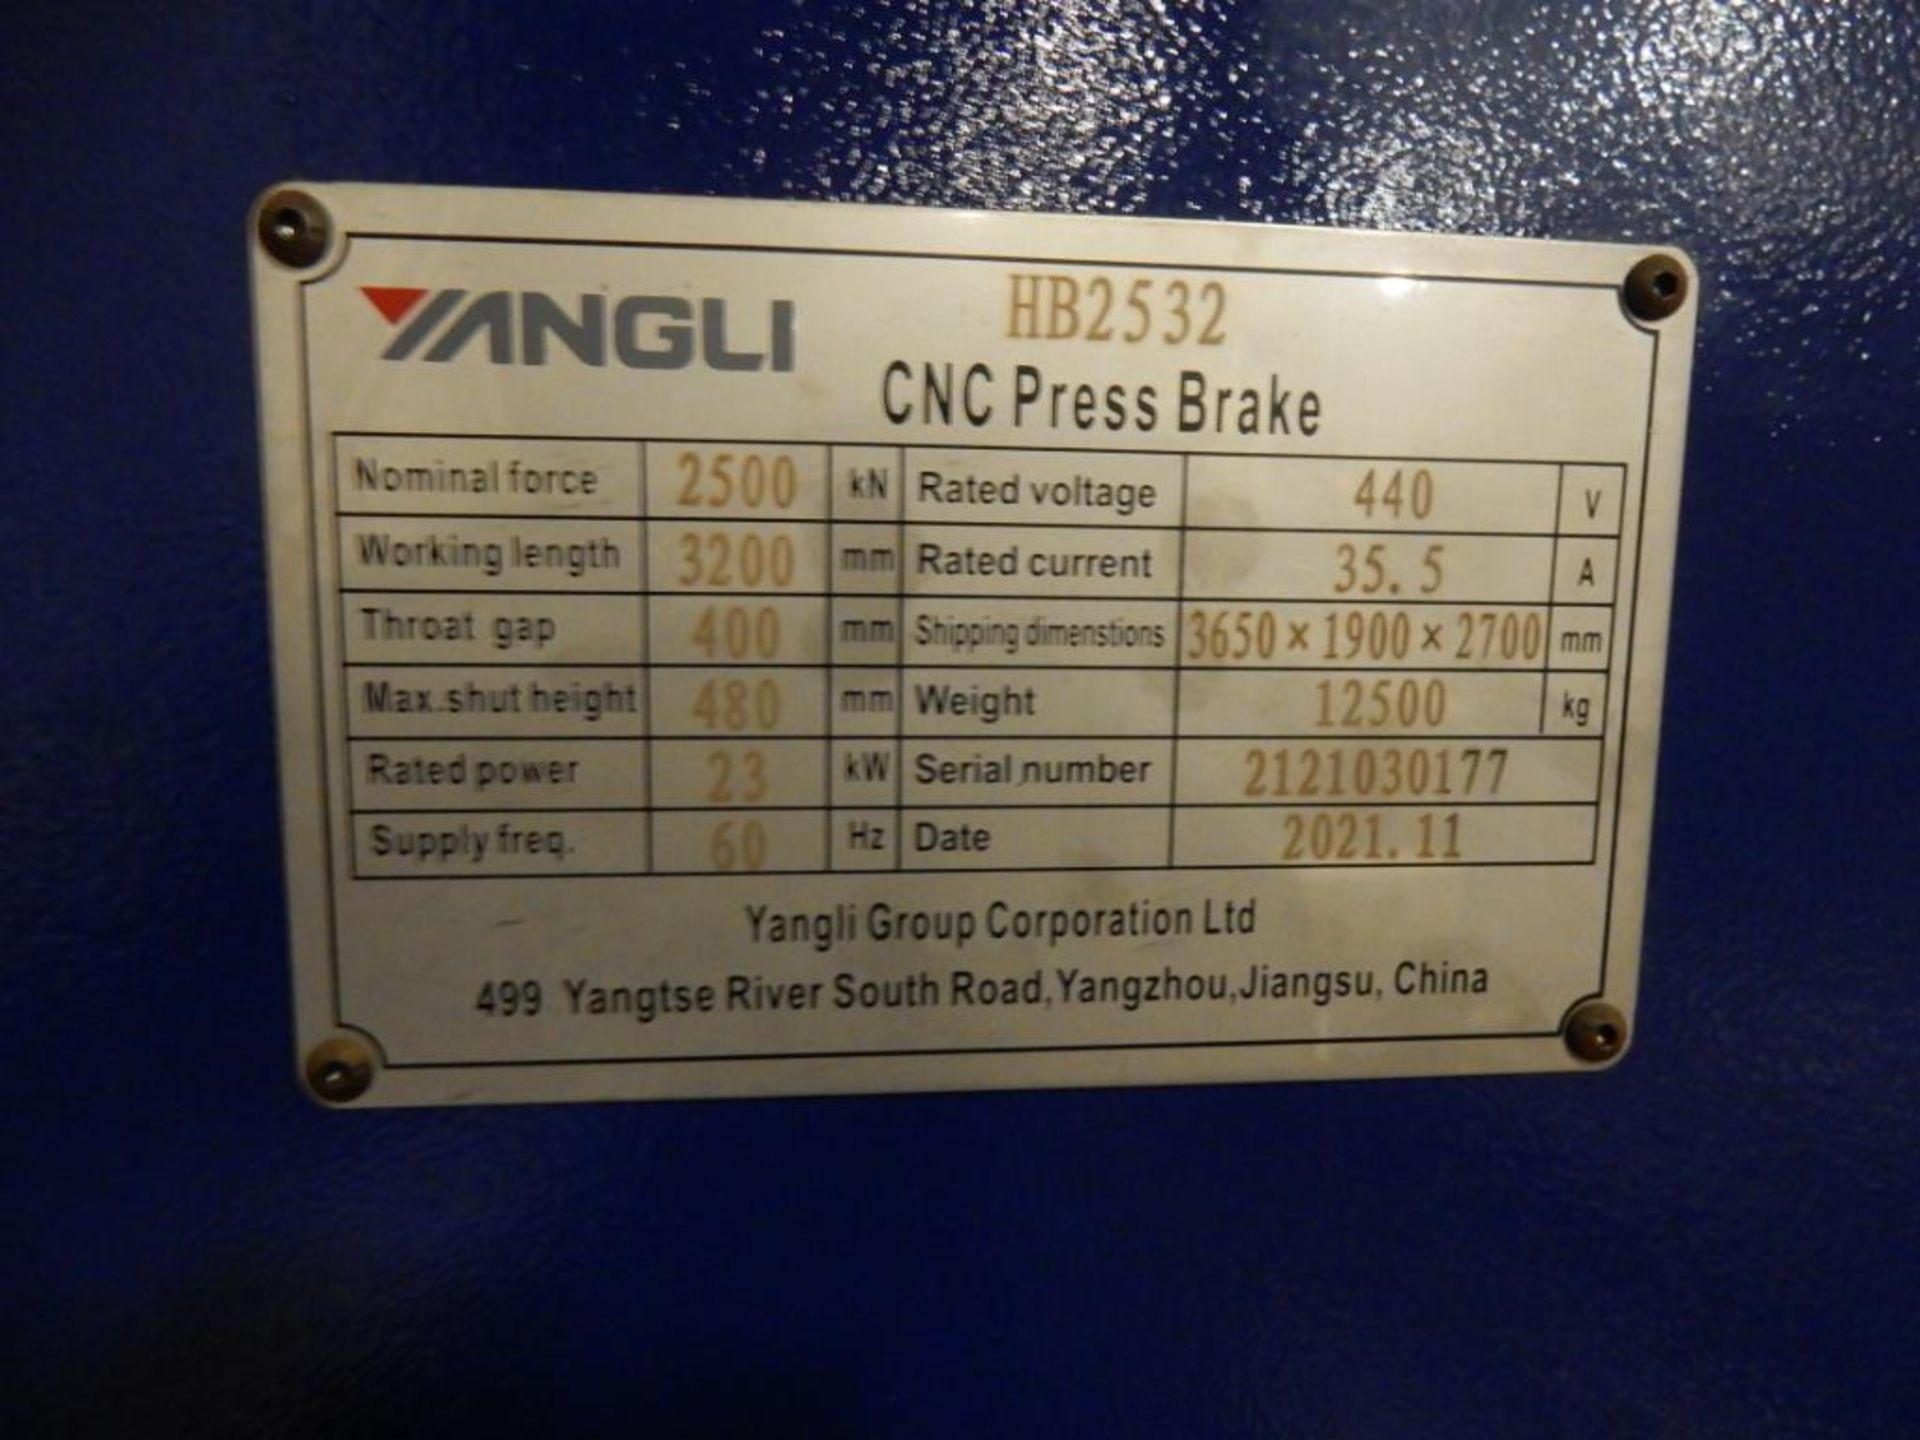 YANGLI CNC PRESS BRAKE, M# HB2532, S/N 2121030177, 11/21, DELEM DA-58T CNC CONTROLS, 2,500 KN X 3,20 - Image 3 of 3